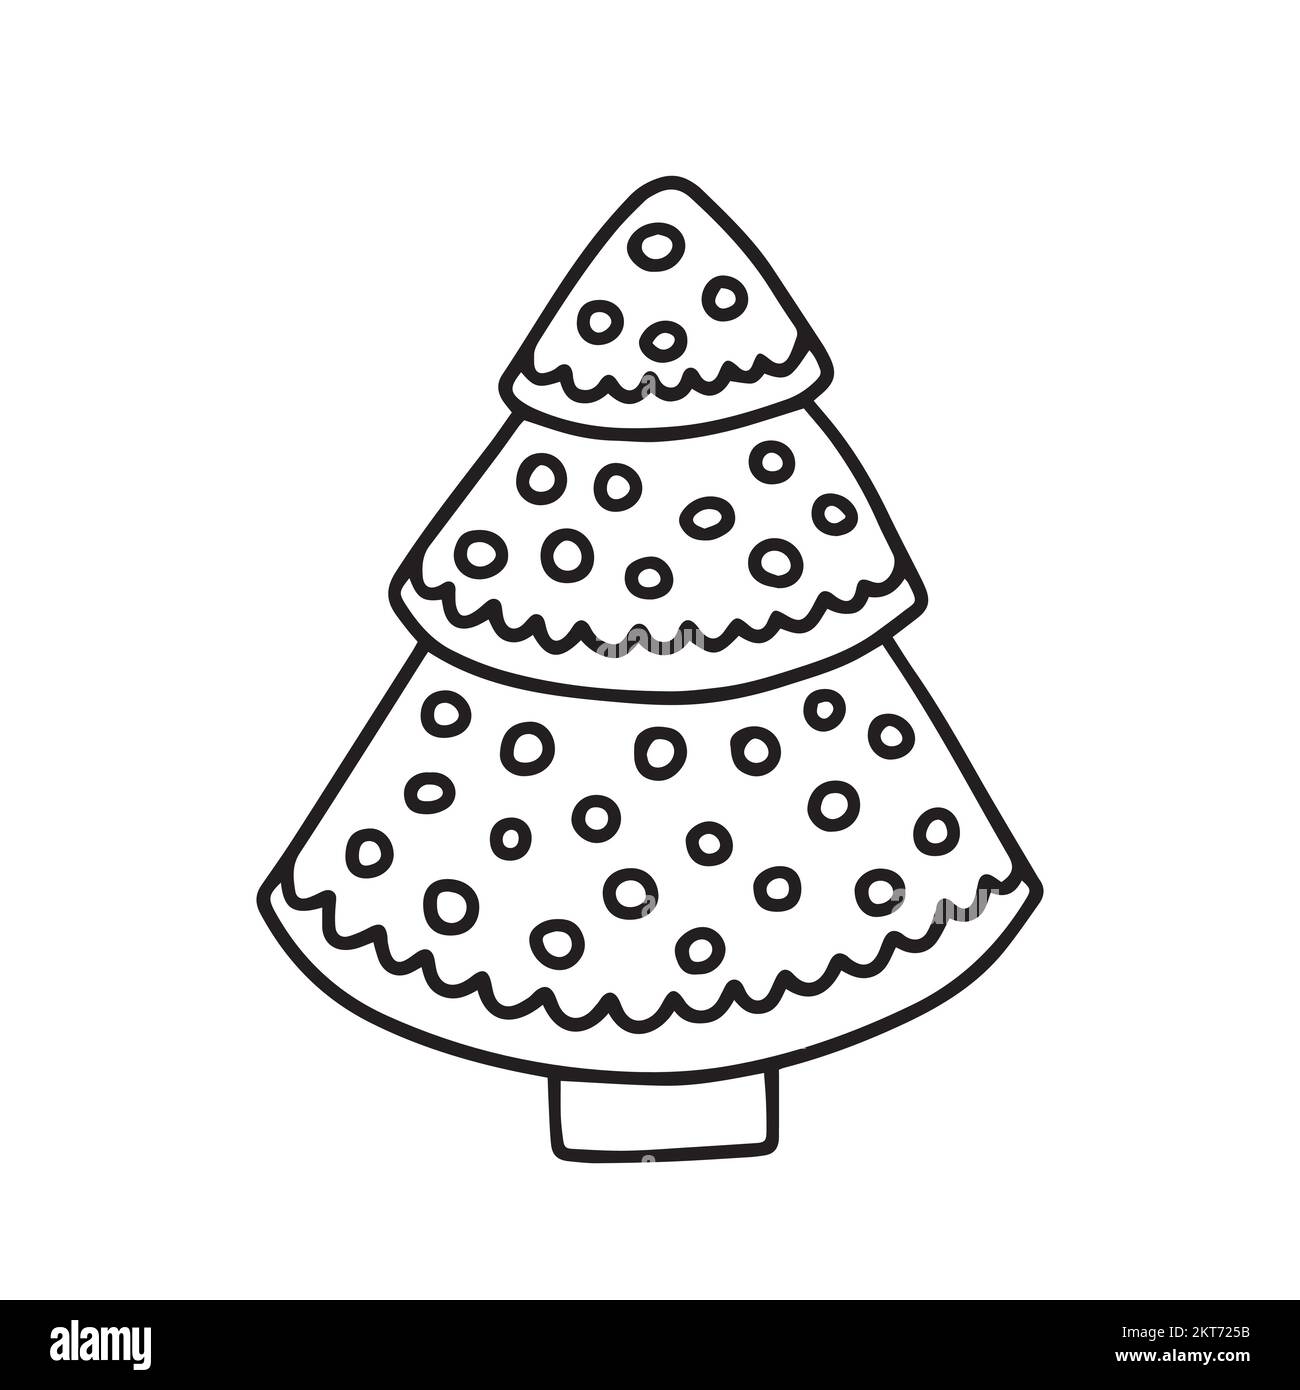 Christmas tree gingerbread illustration Stock Vector